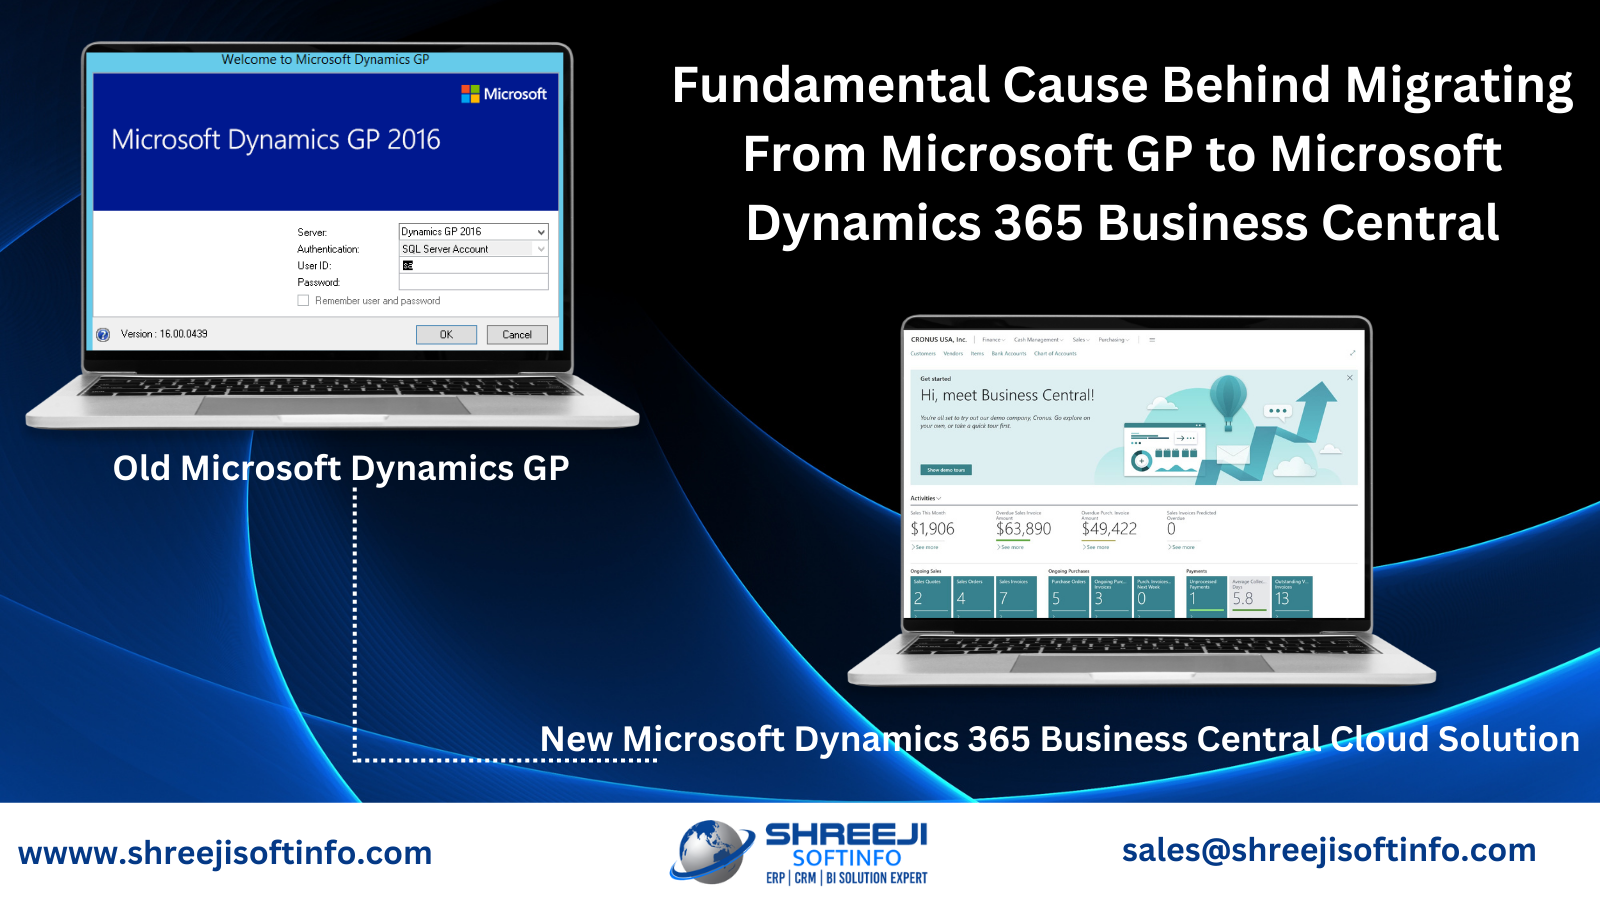 Microsoft Dynamics 365 Business Central Cloud Solution